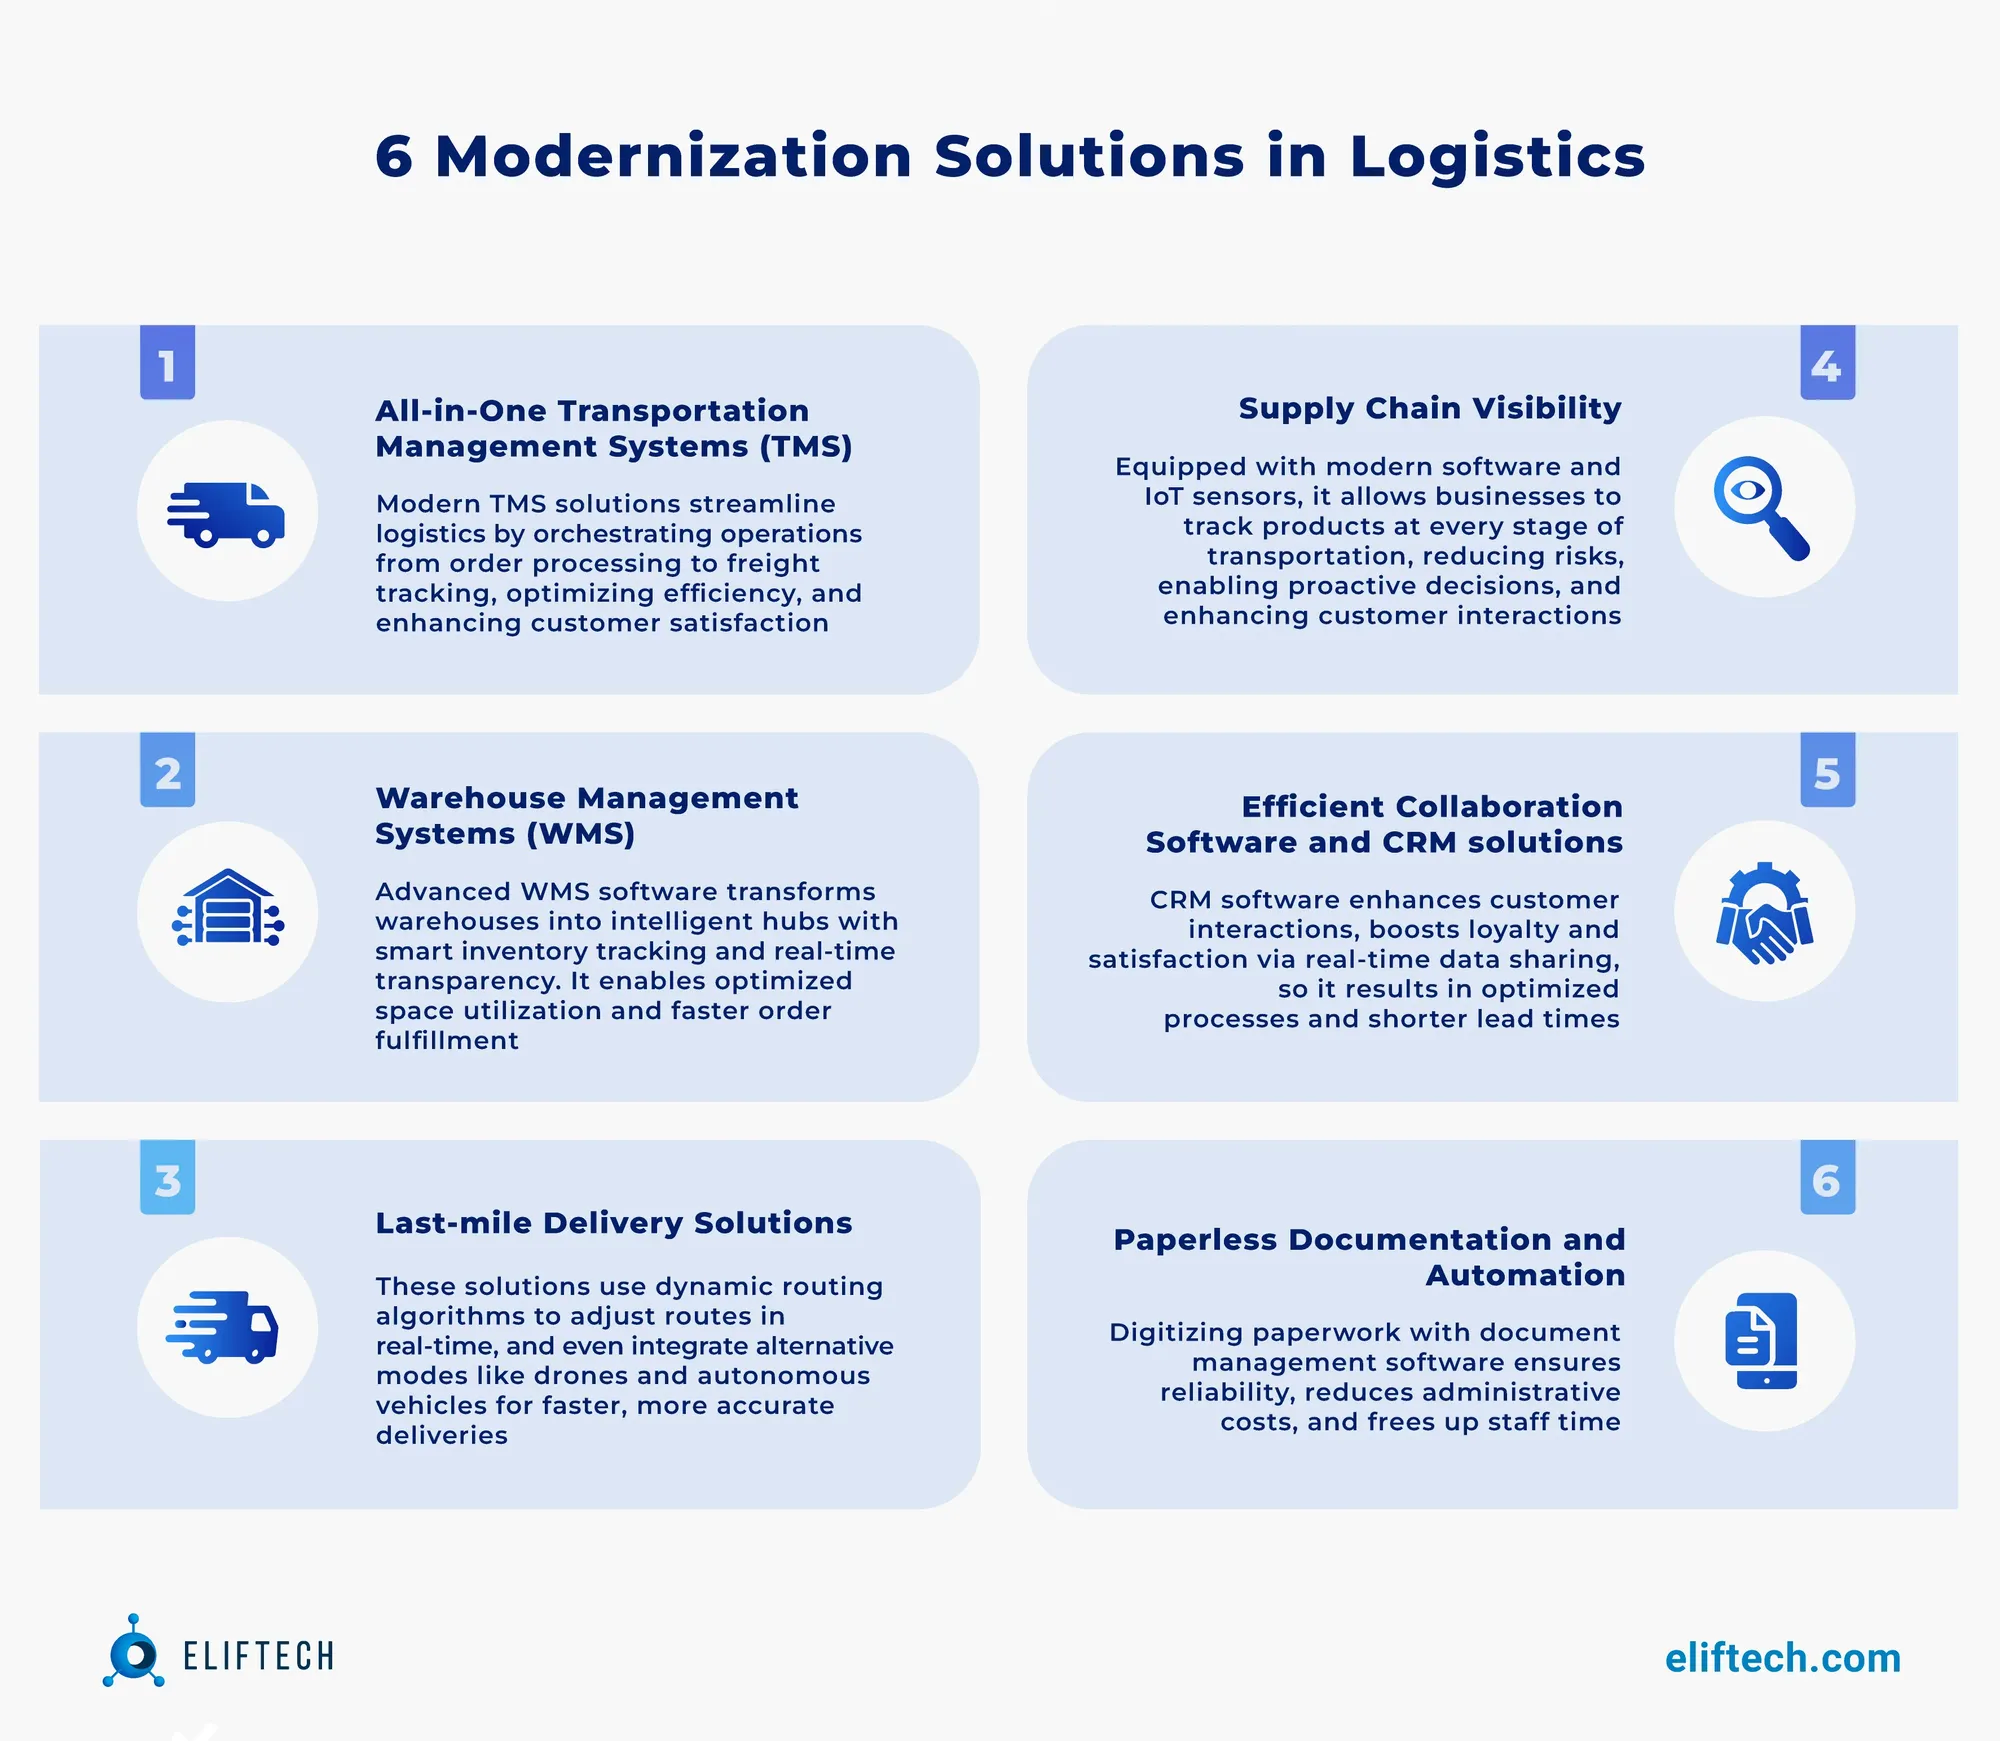 Modernization solutions in logistics